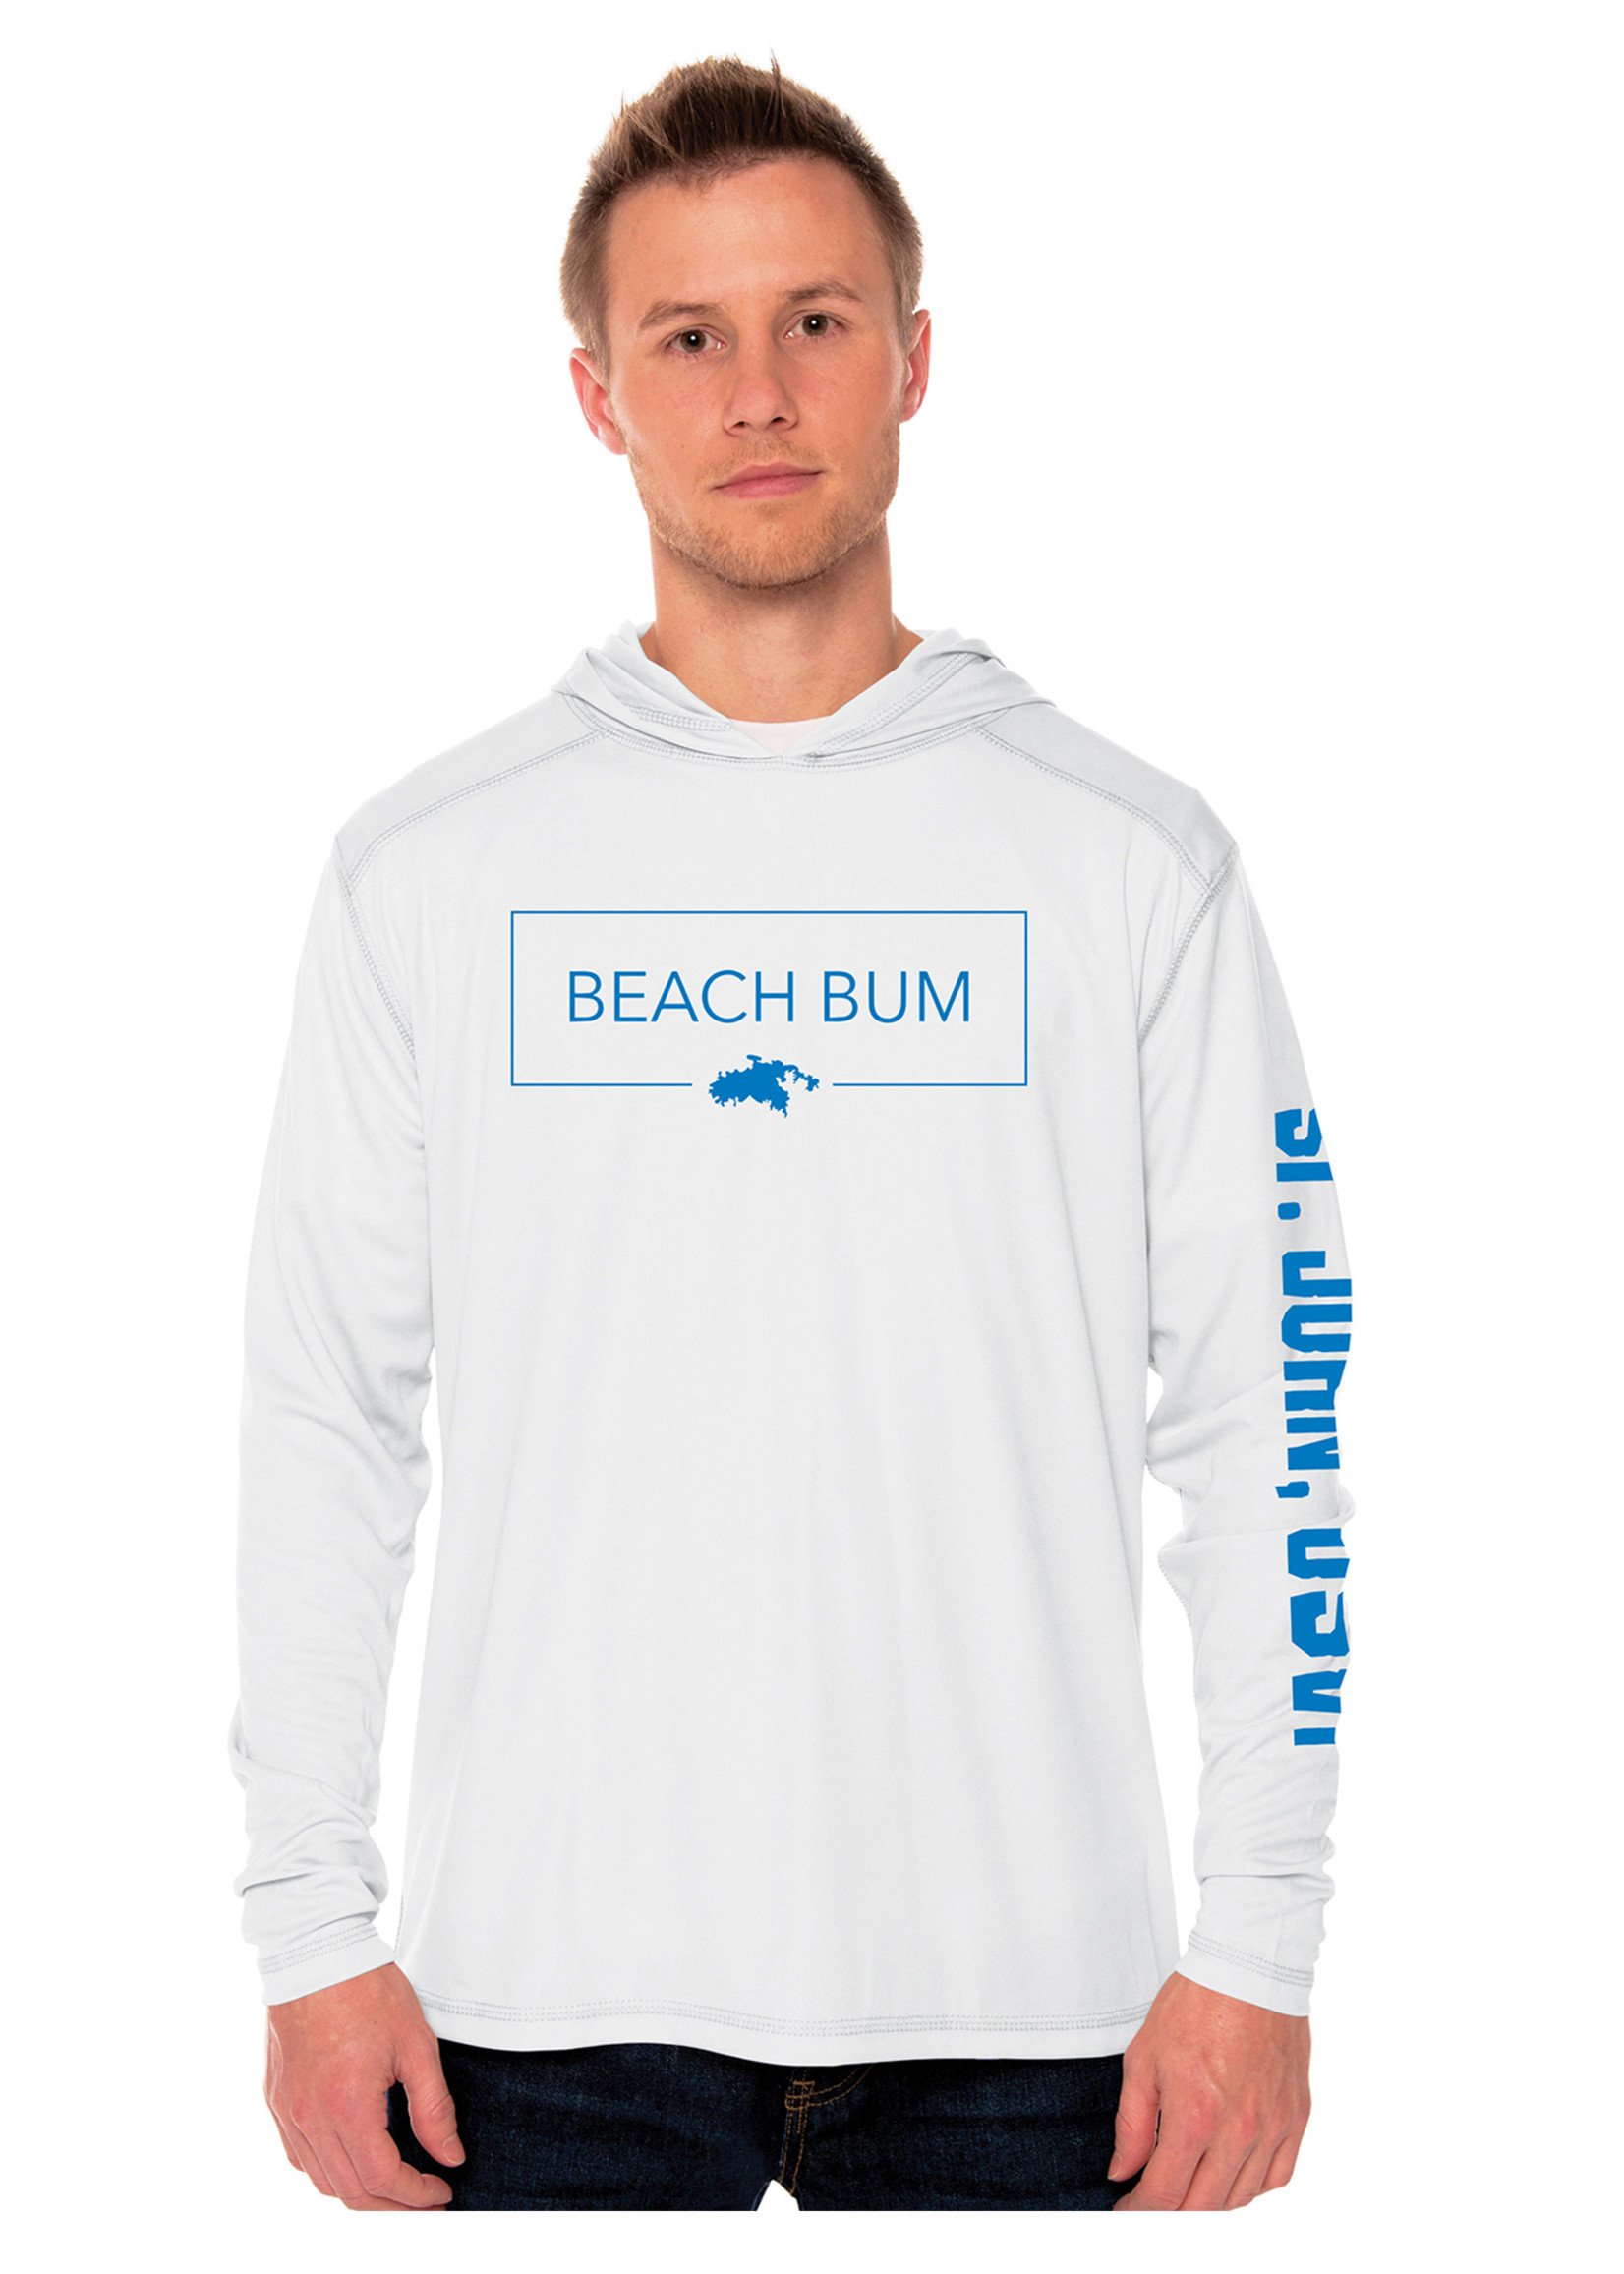 St. John Beach Bum Men's SPF50 Hoody - Classy Bum